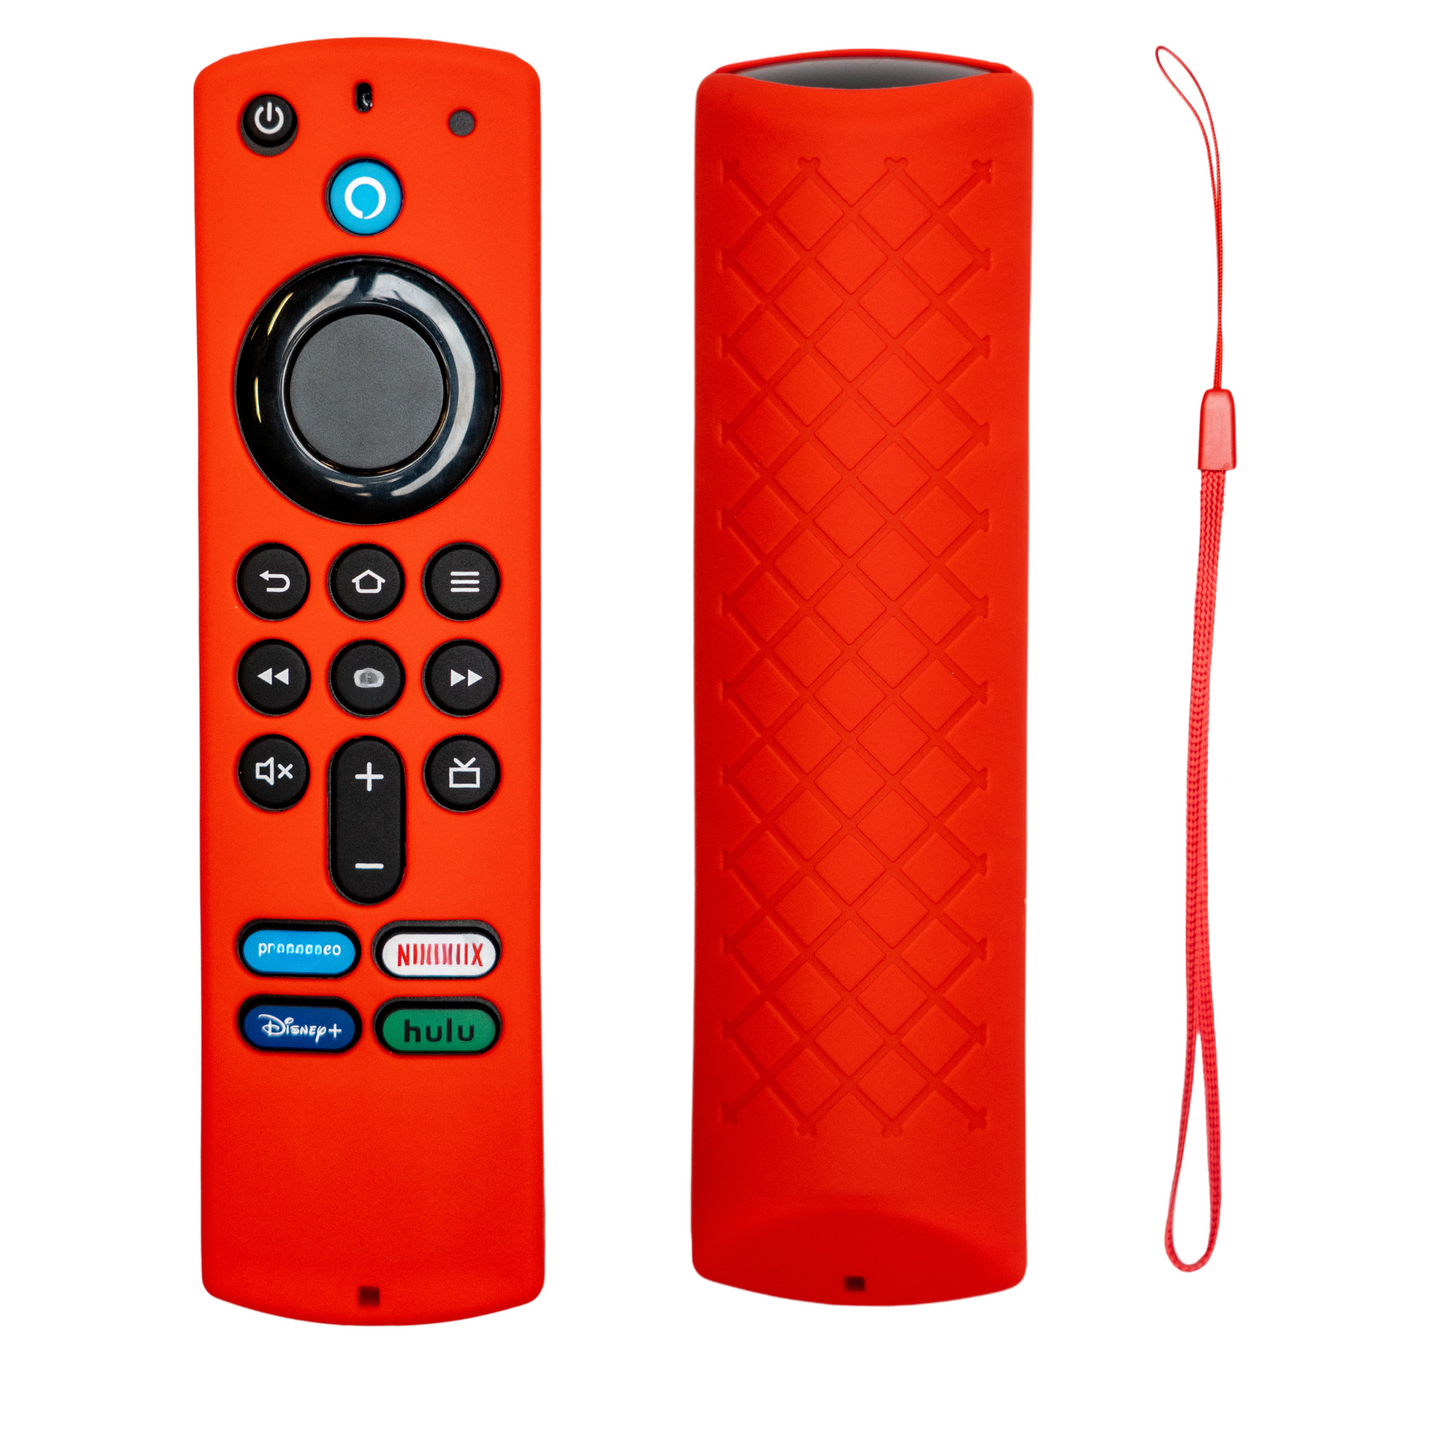 Inbrackets Remote Control Case Silicone Remote Cover Skin For Amazon Fire TV Stick 3rd Gen